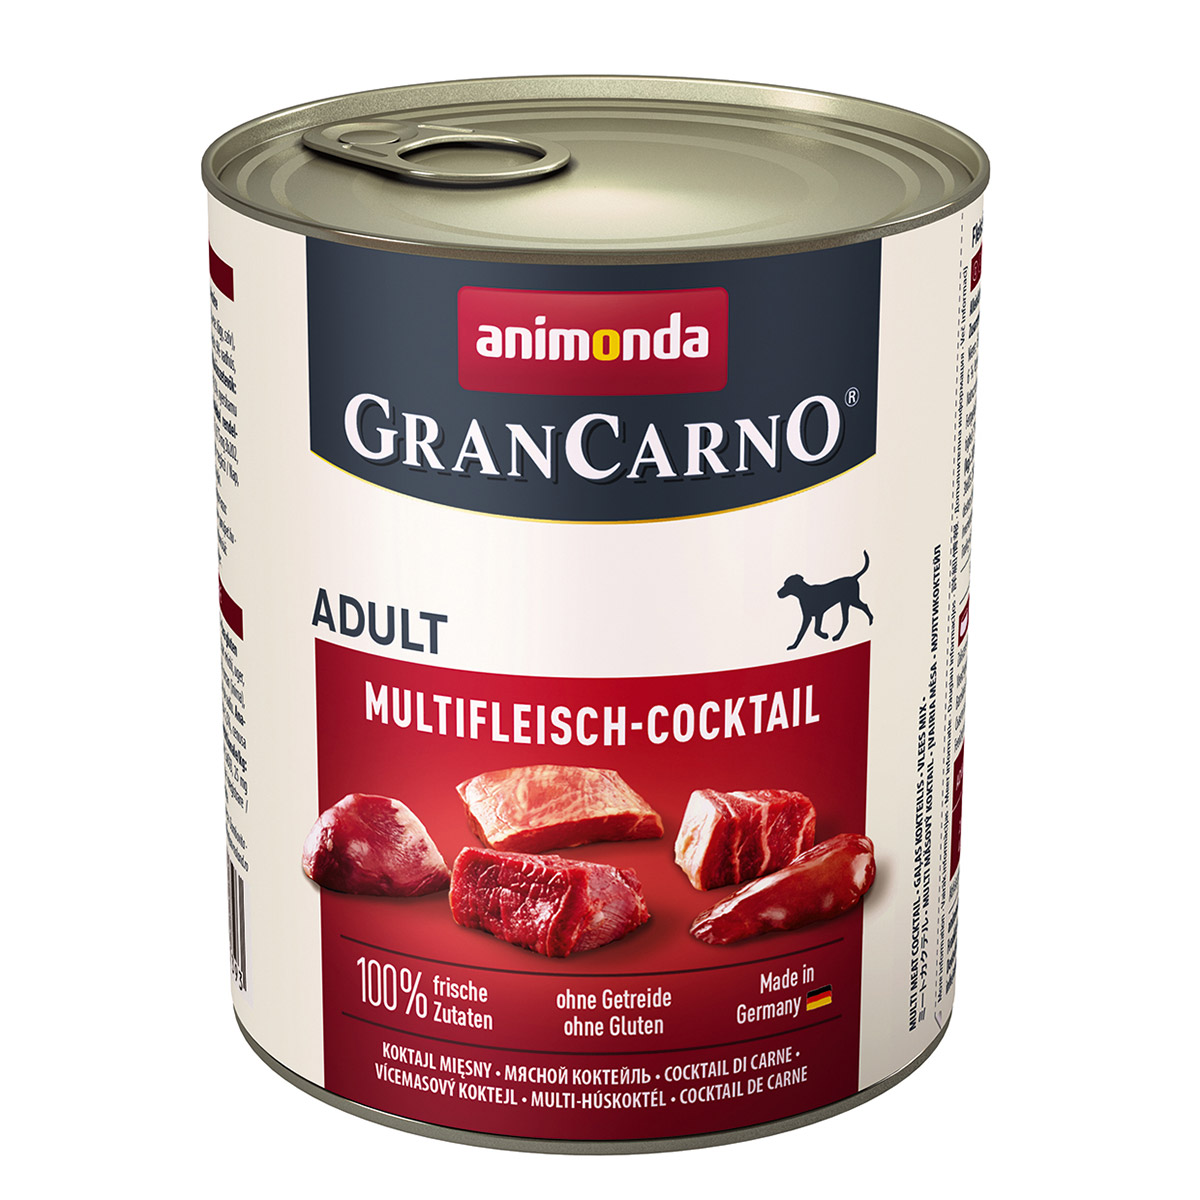 animonda grancarno adult multifleisch cocktail 800g